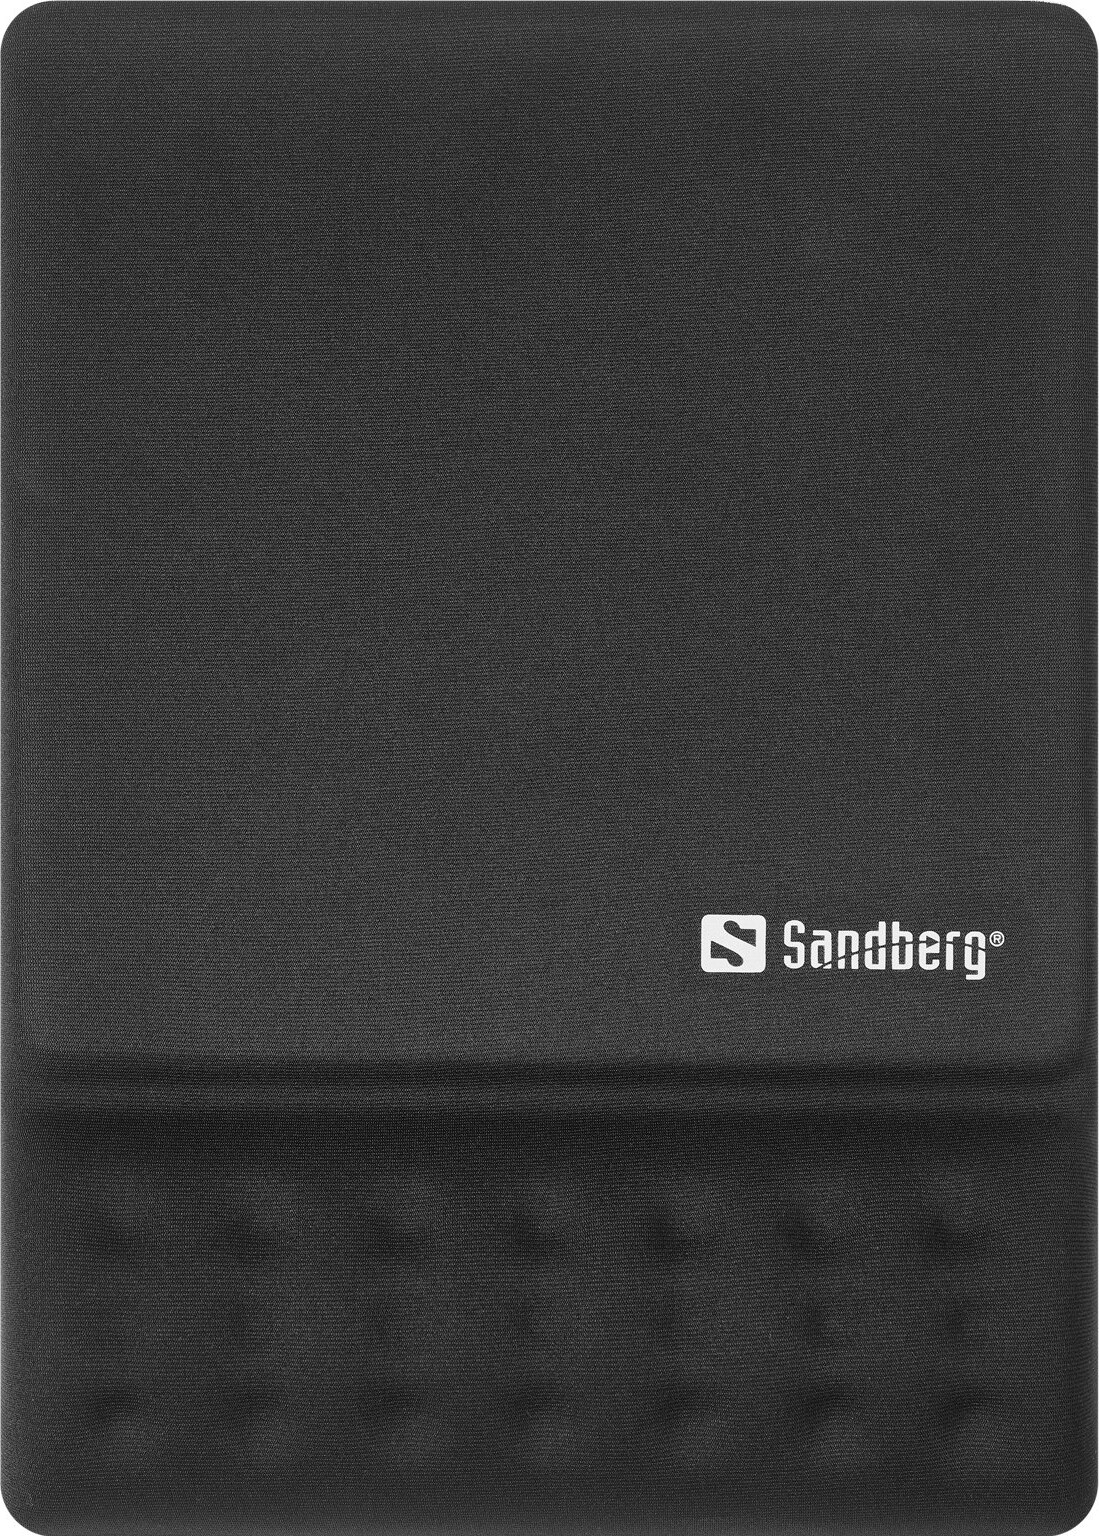 Se Sandberg - Memory Foam Mousepad Square hos Gucca.dk